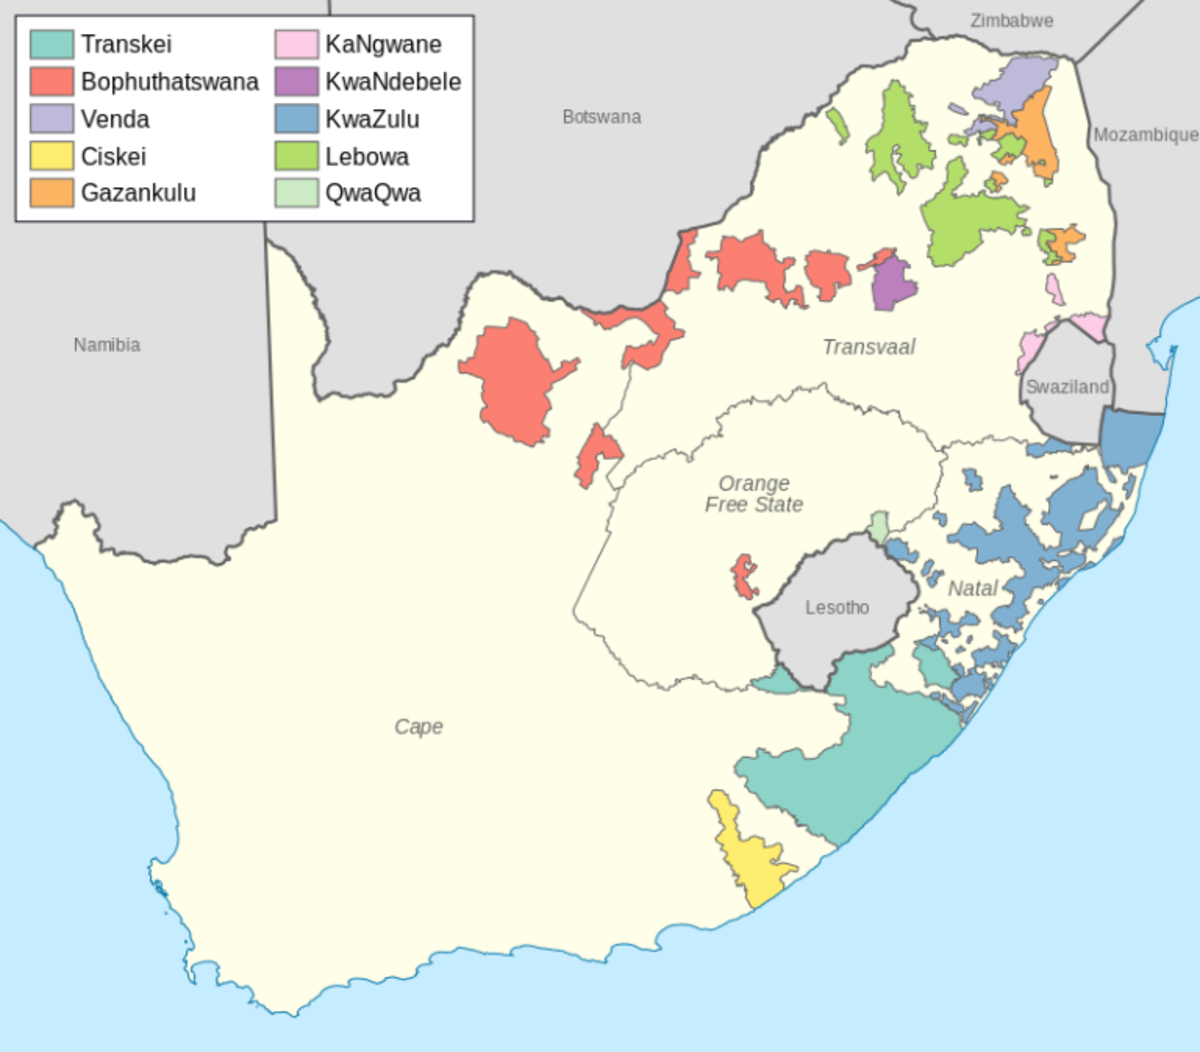 Black homelands during Apartheid in South Africa 1960-1994